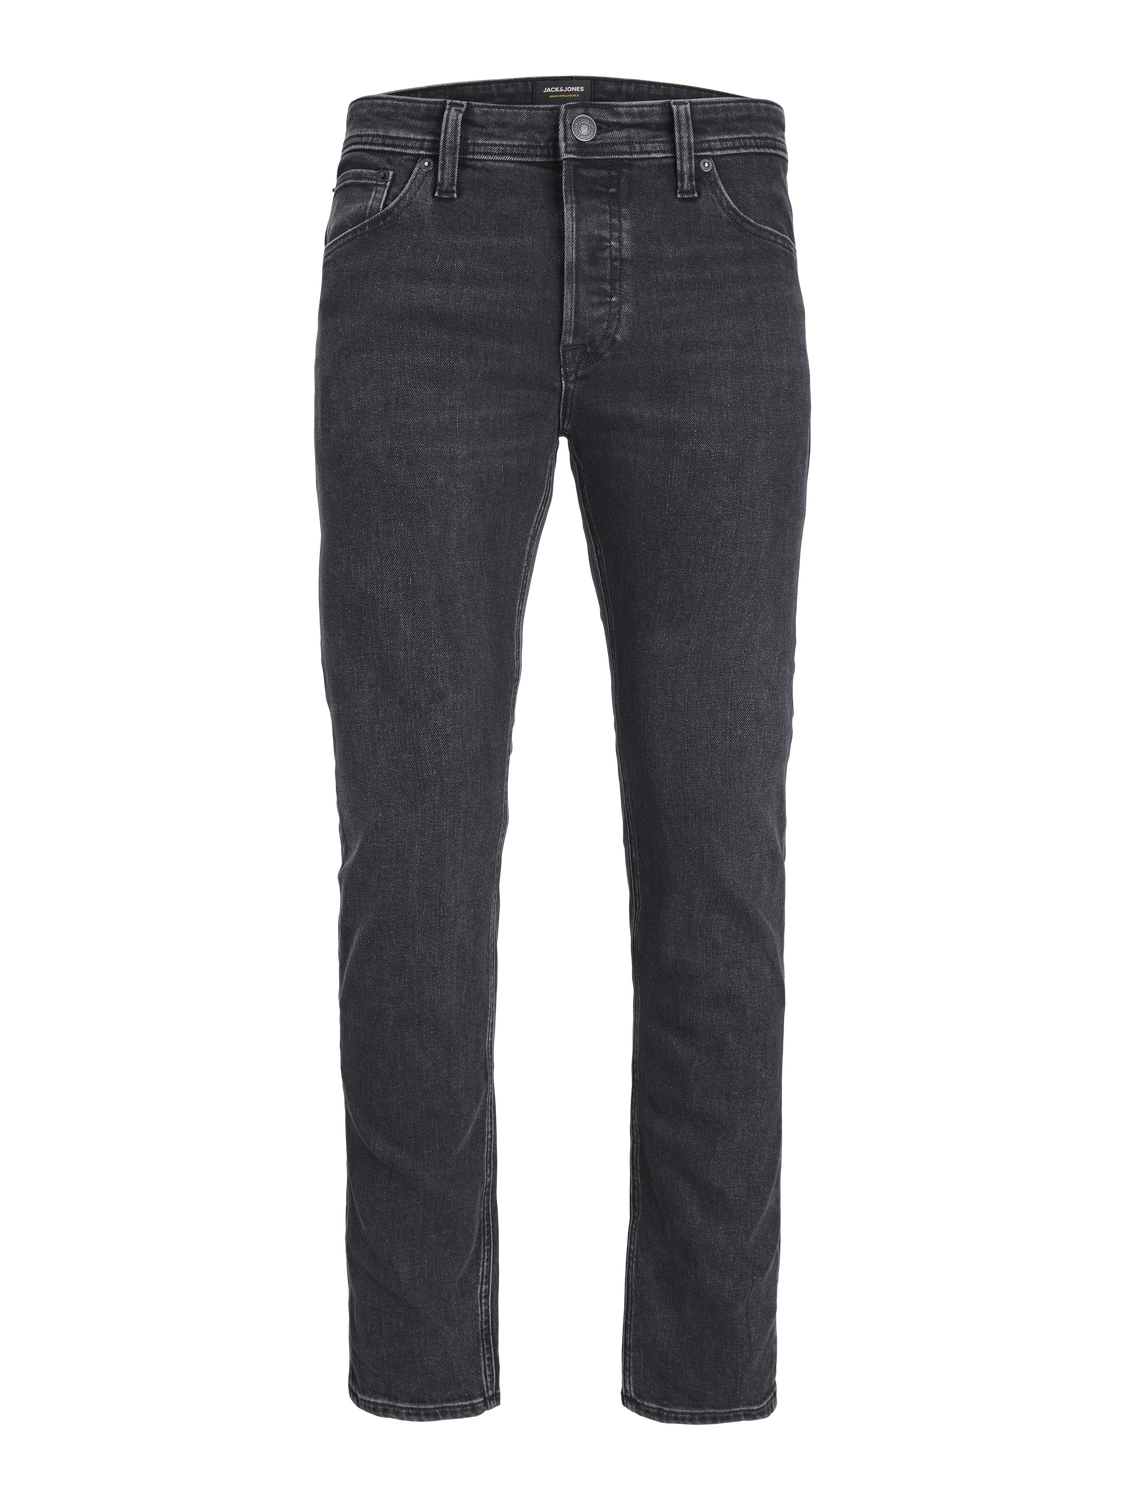 JJIMIKE Jeans - Black Denim